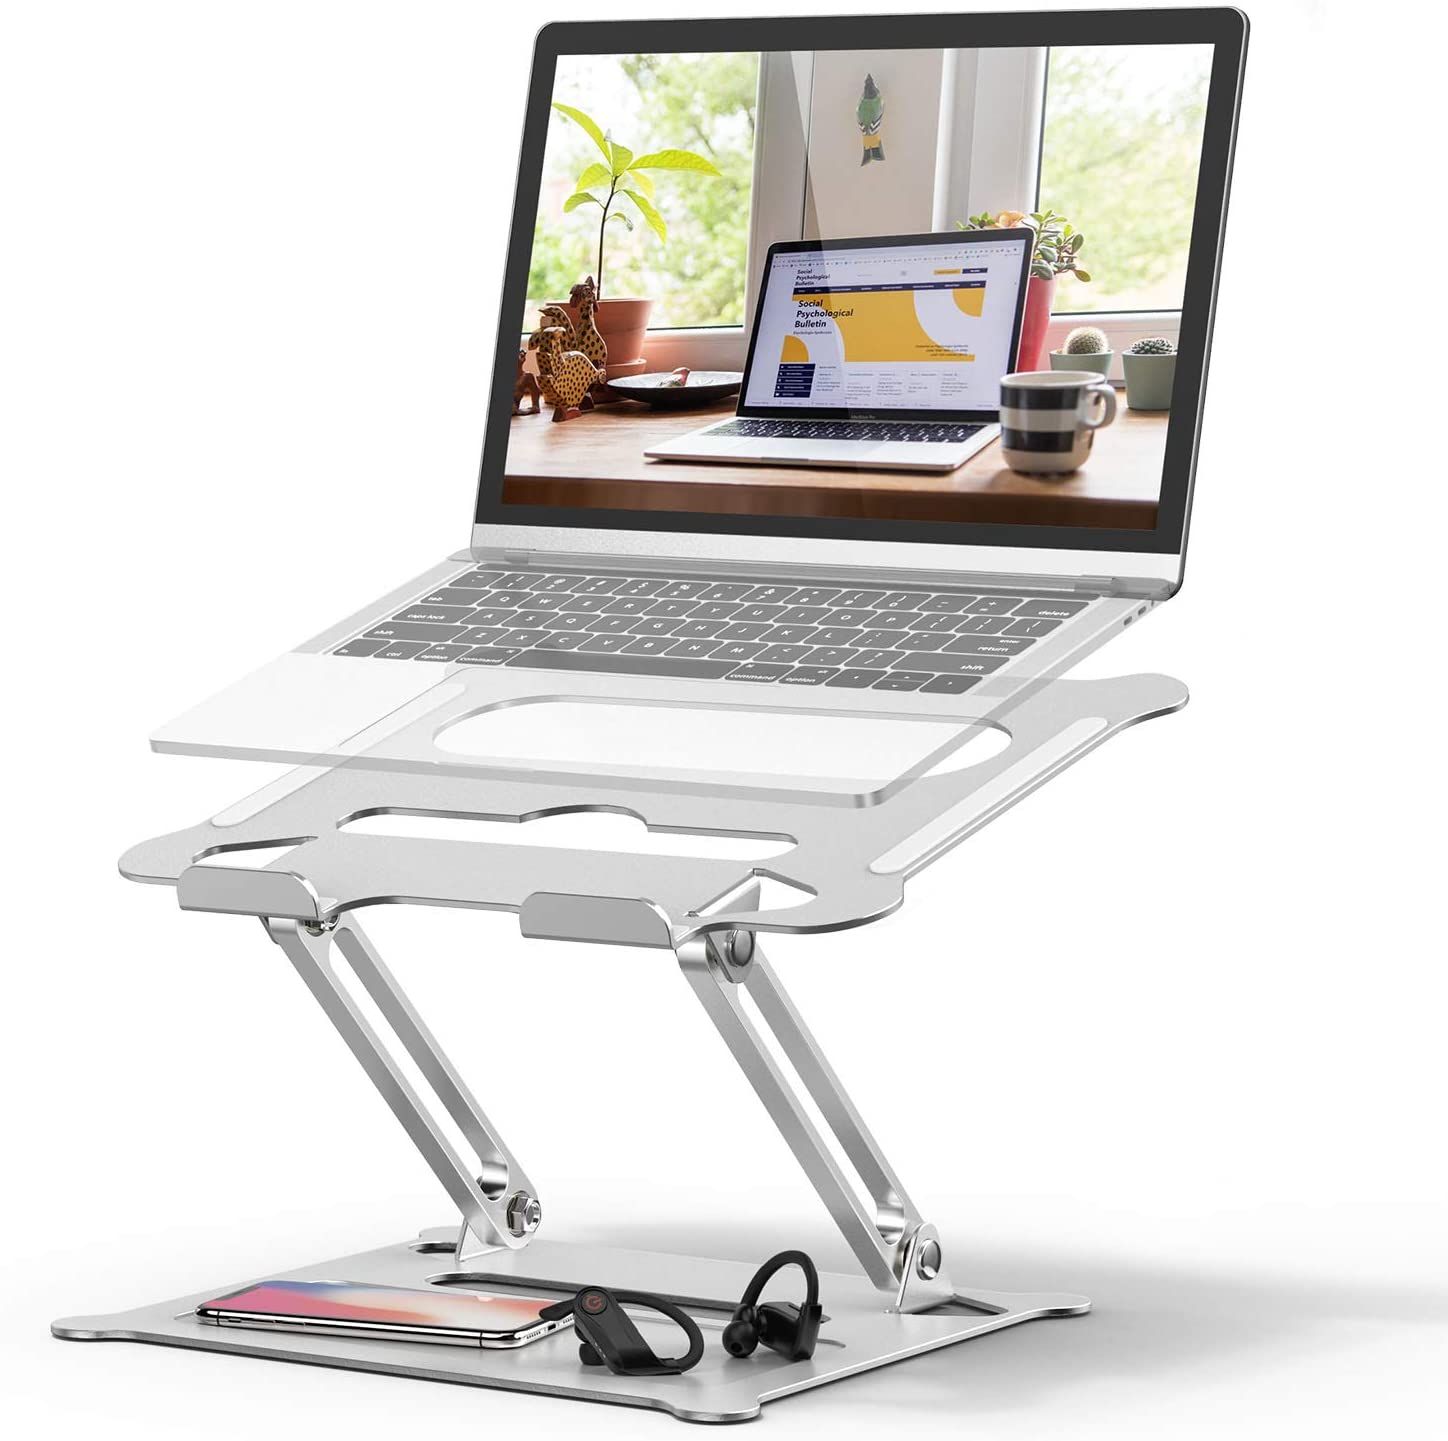  Nulaxy Laptop Stand, Detachable Ergonomic Laptop Mount